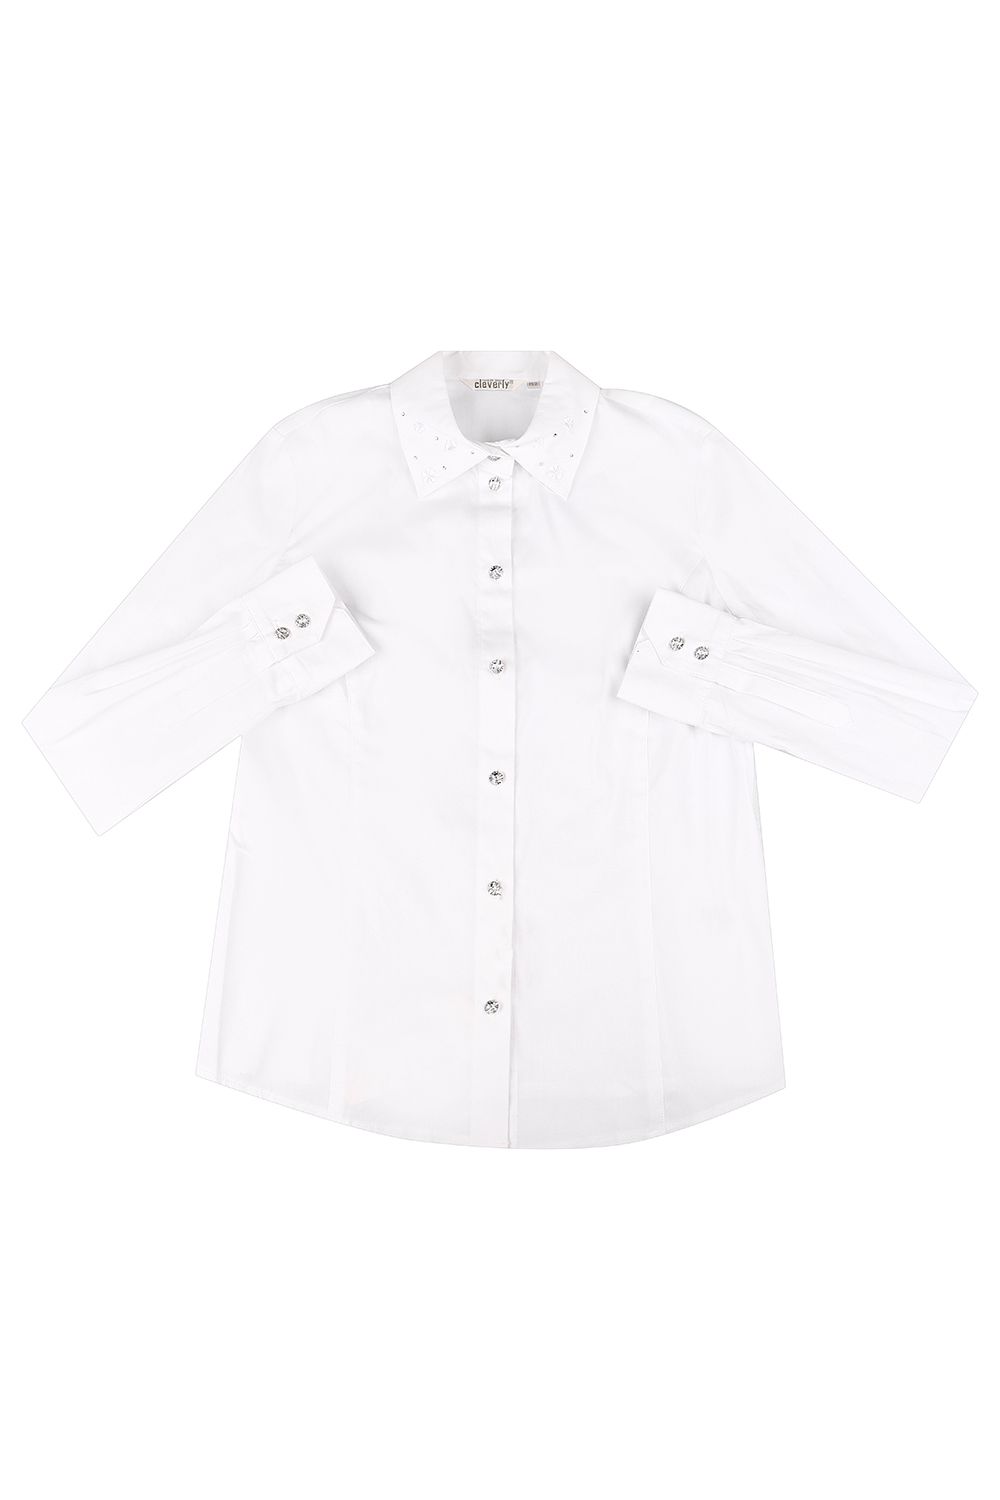 Блуза Cleverly, размер 158, цвет белый S7CB02-0401/0401 - фото 1